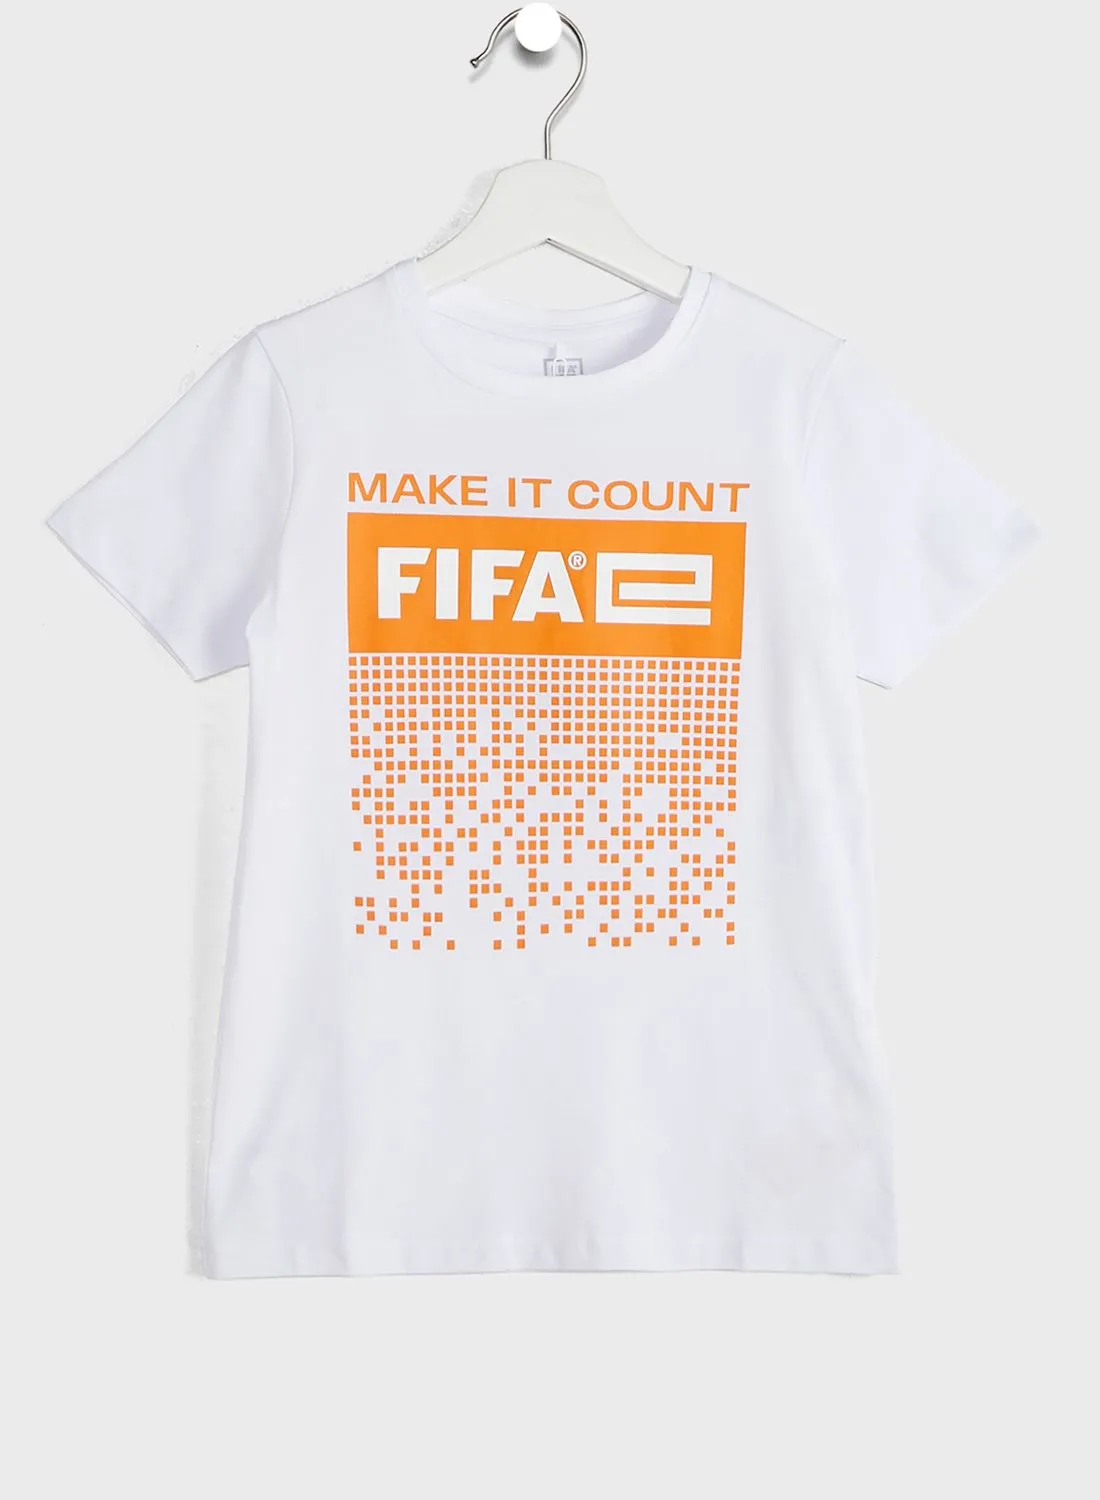 NAME IT Kids FIFA T-Shirt